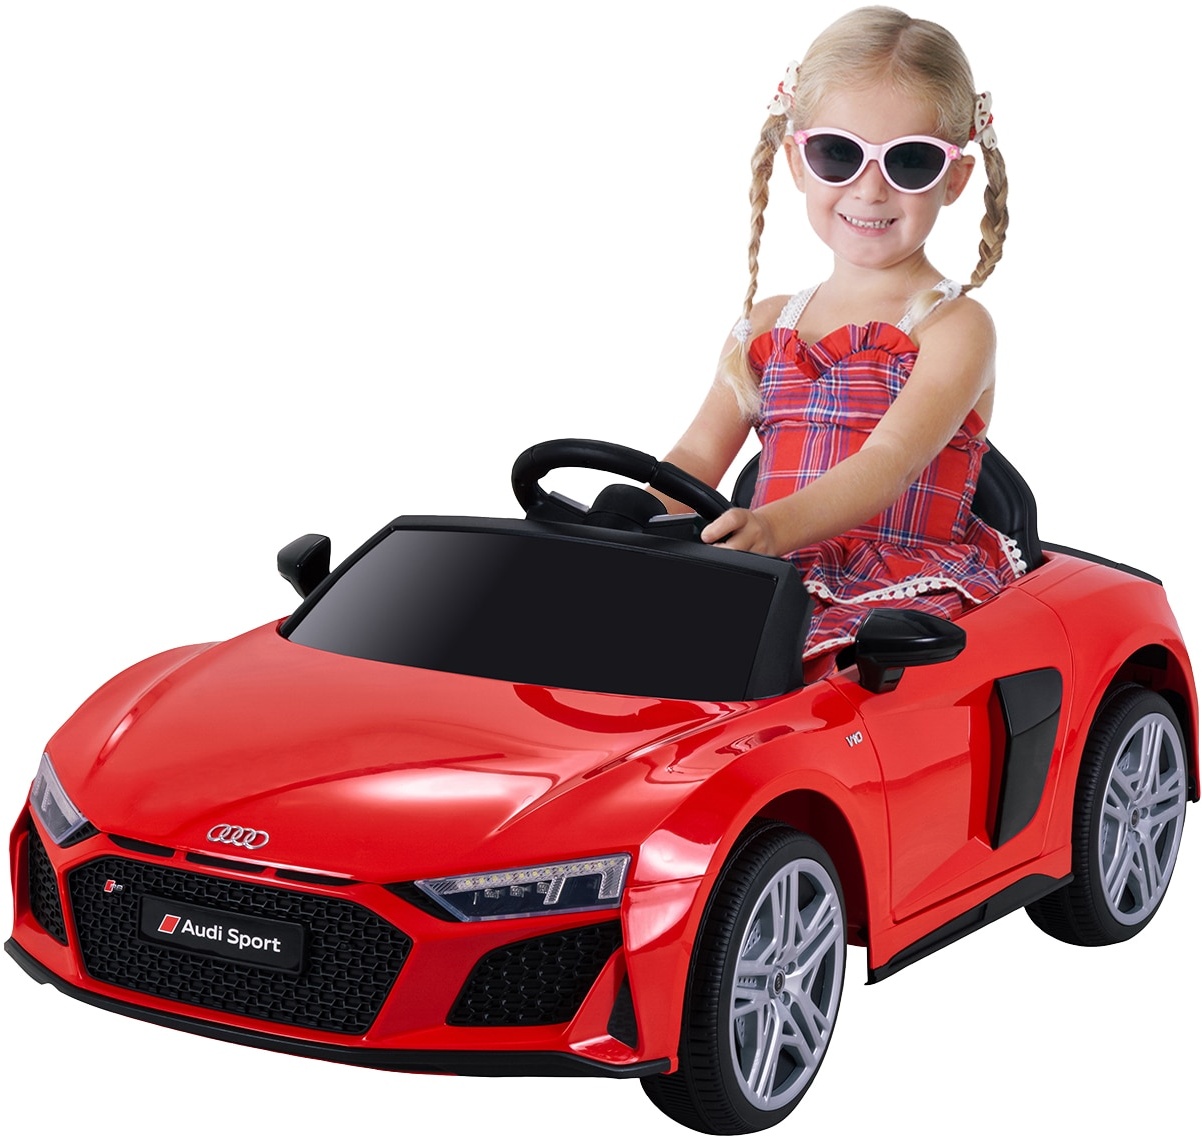 Kinder-Elektroauto Audi R8 Spyder lizenziert, 60 Watt, LED-Scheinwerfer, Musik, Hupe, Fernbedienung, (Rot)